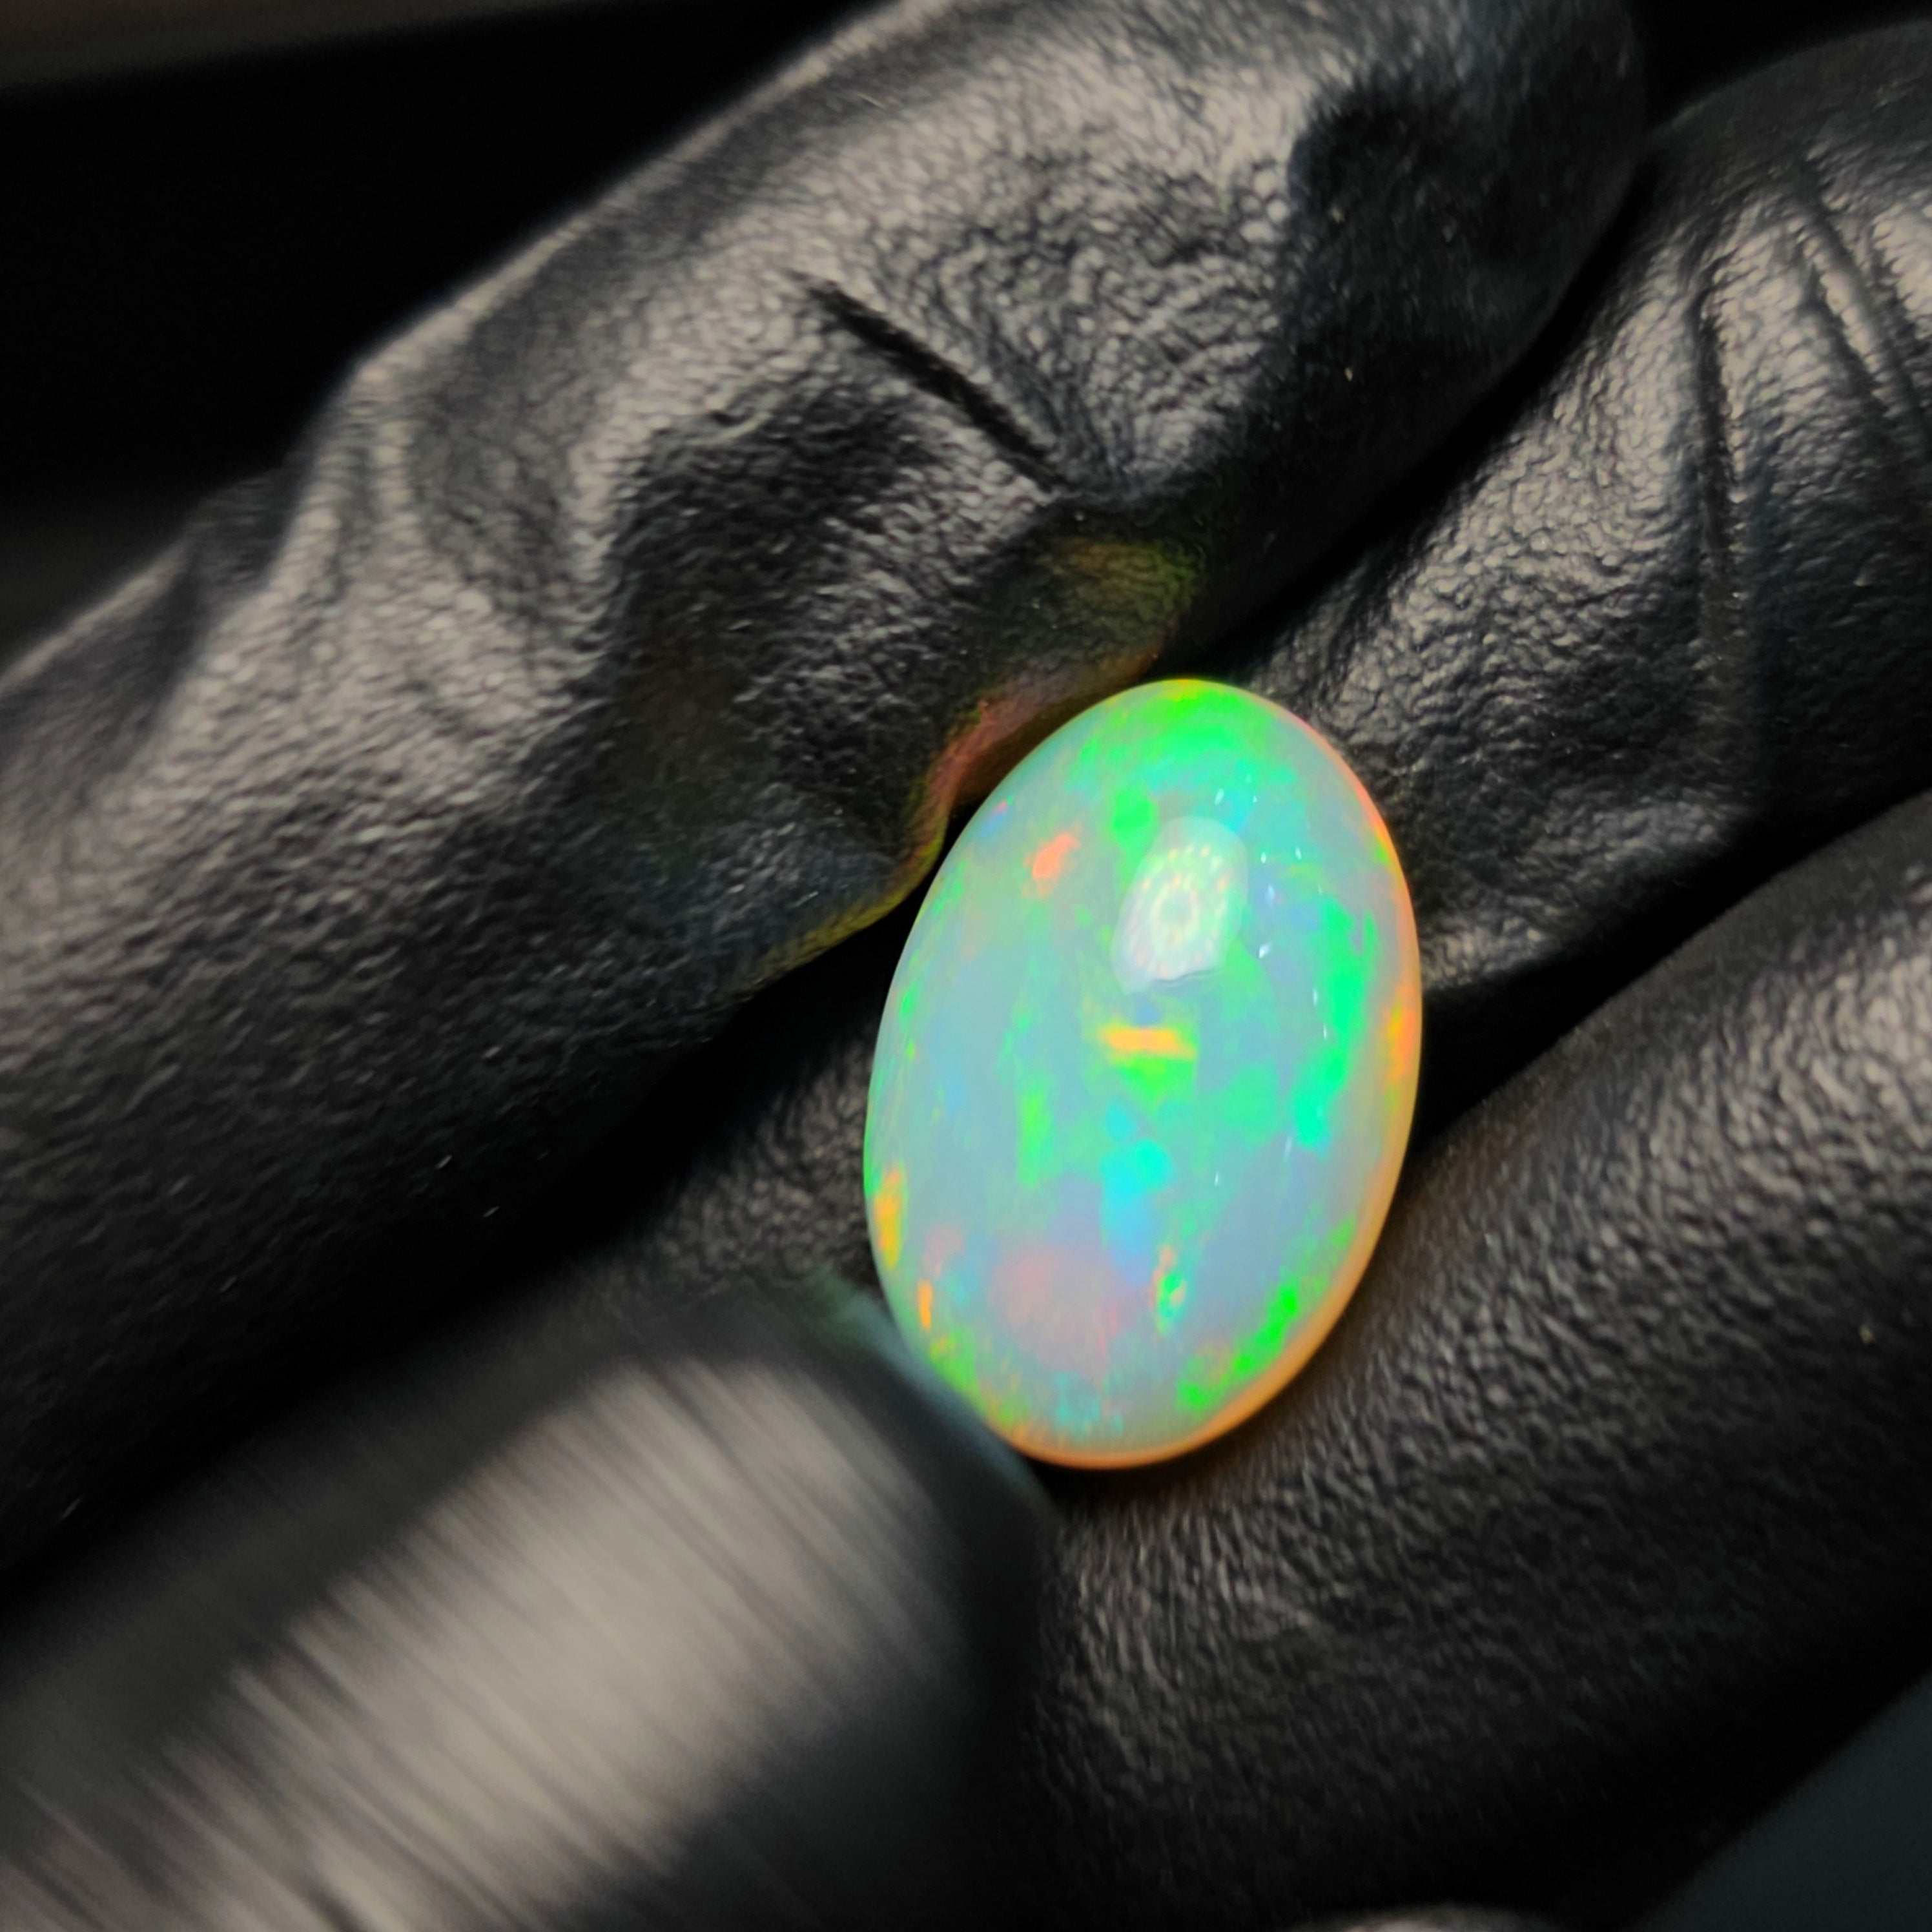 1 Pcs Of Natural Ethopian Opal Oval Shape  |WT: 7.2 Cts|Size: 18x13mm - The LabradoriteKing